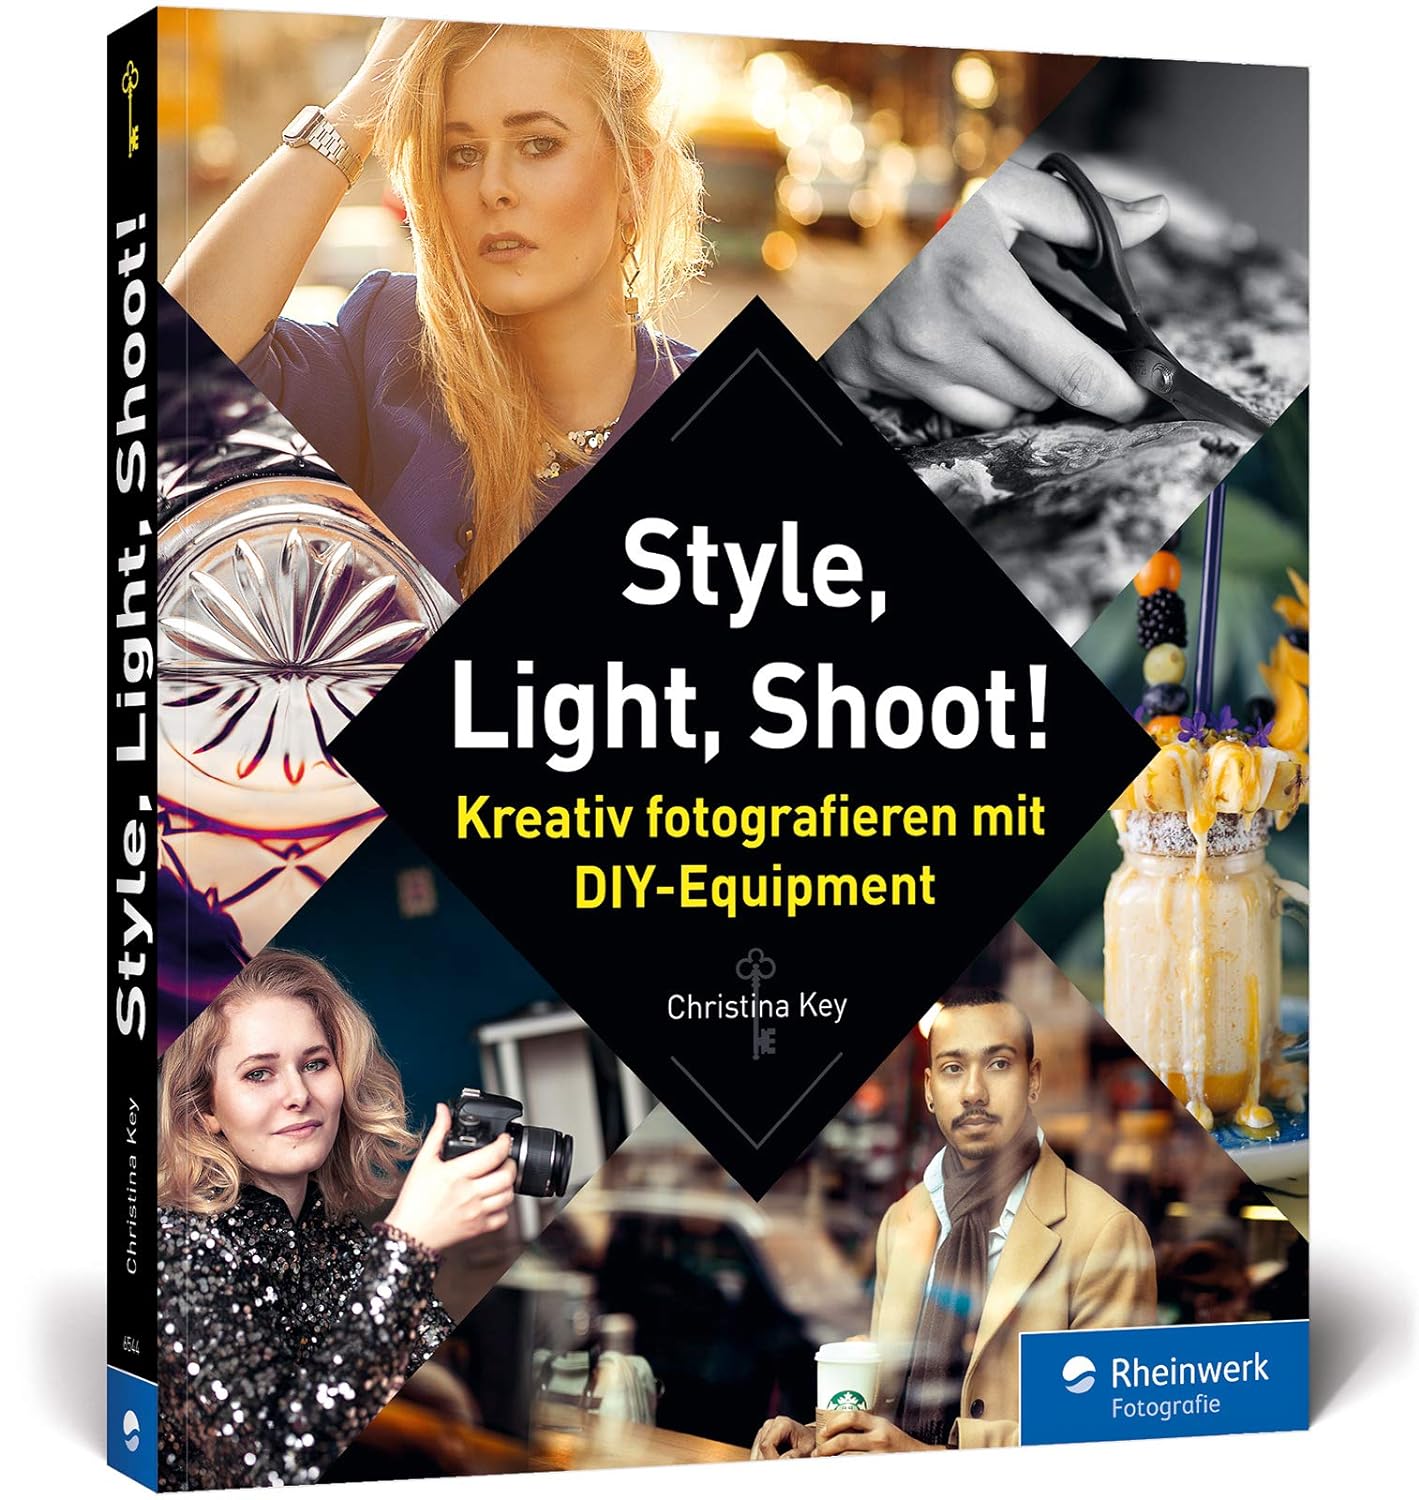 Style, Light, Shoot! Kreativ fotografieren mit DIY-Equipment von Christina Key